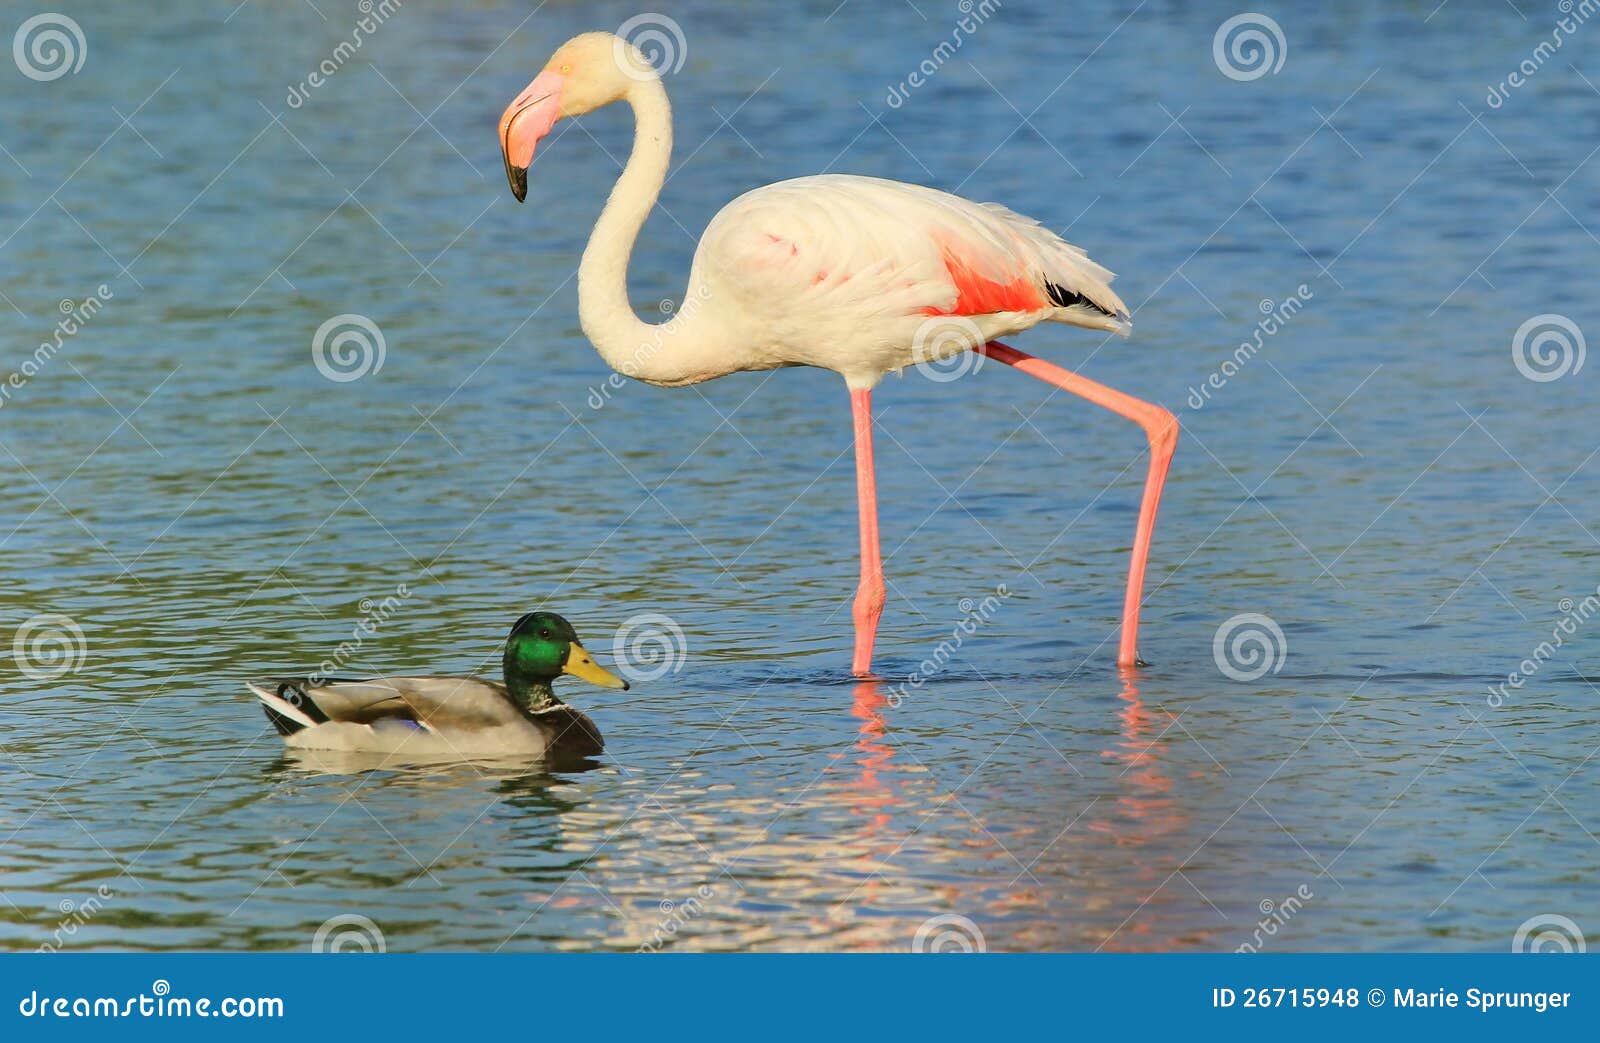 https://thumbs.dreamstime.com/z/camargue-flamingo-und-ente-26715948.jpg